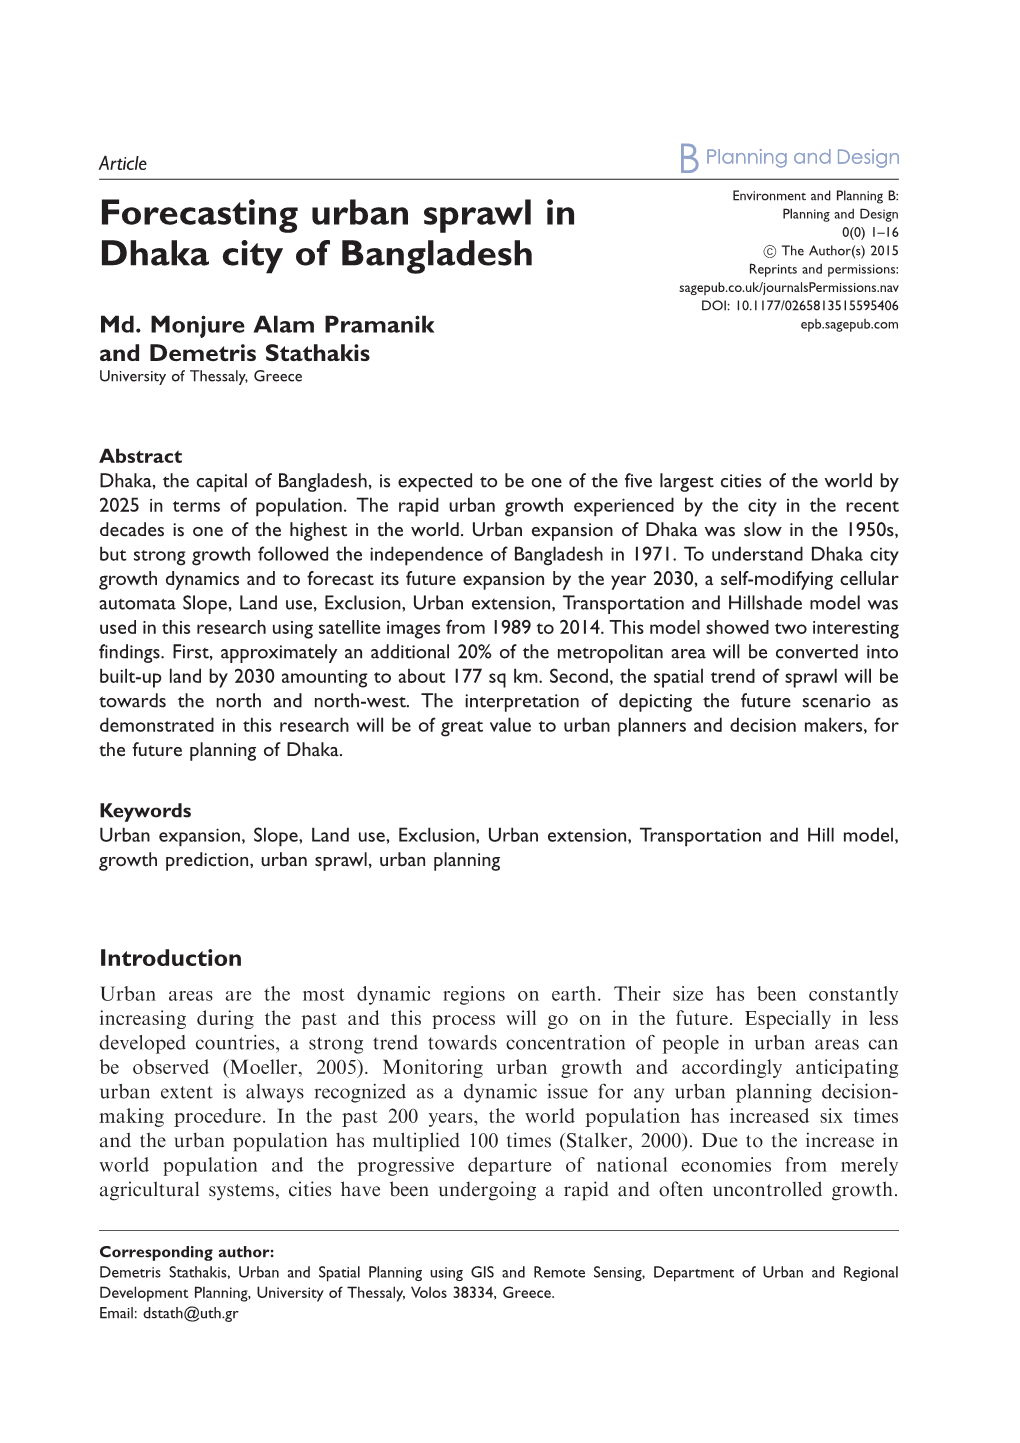 Forecasting Urban Sprawl in Dhaka City of Bangladesh